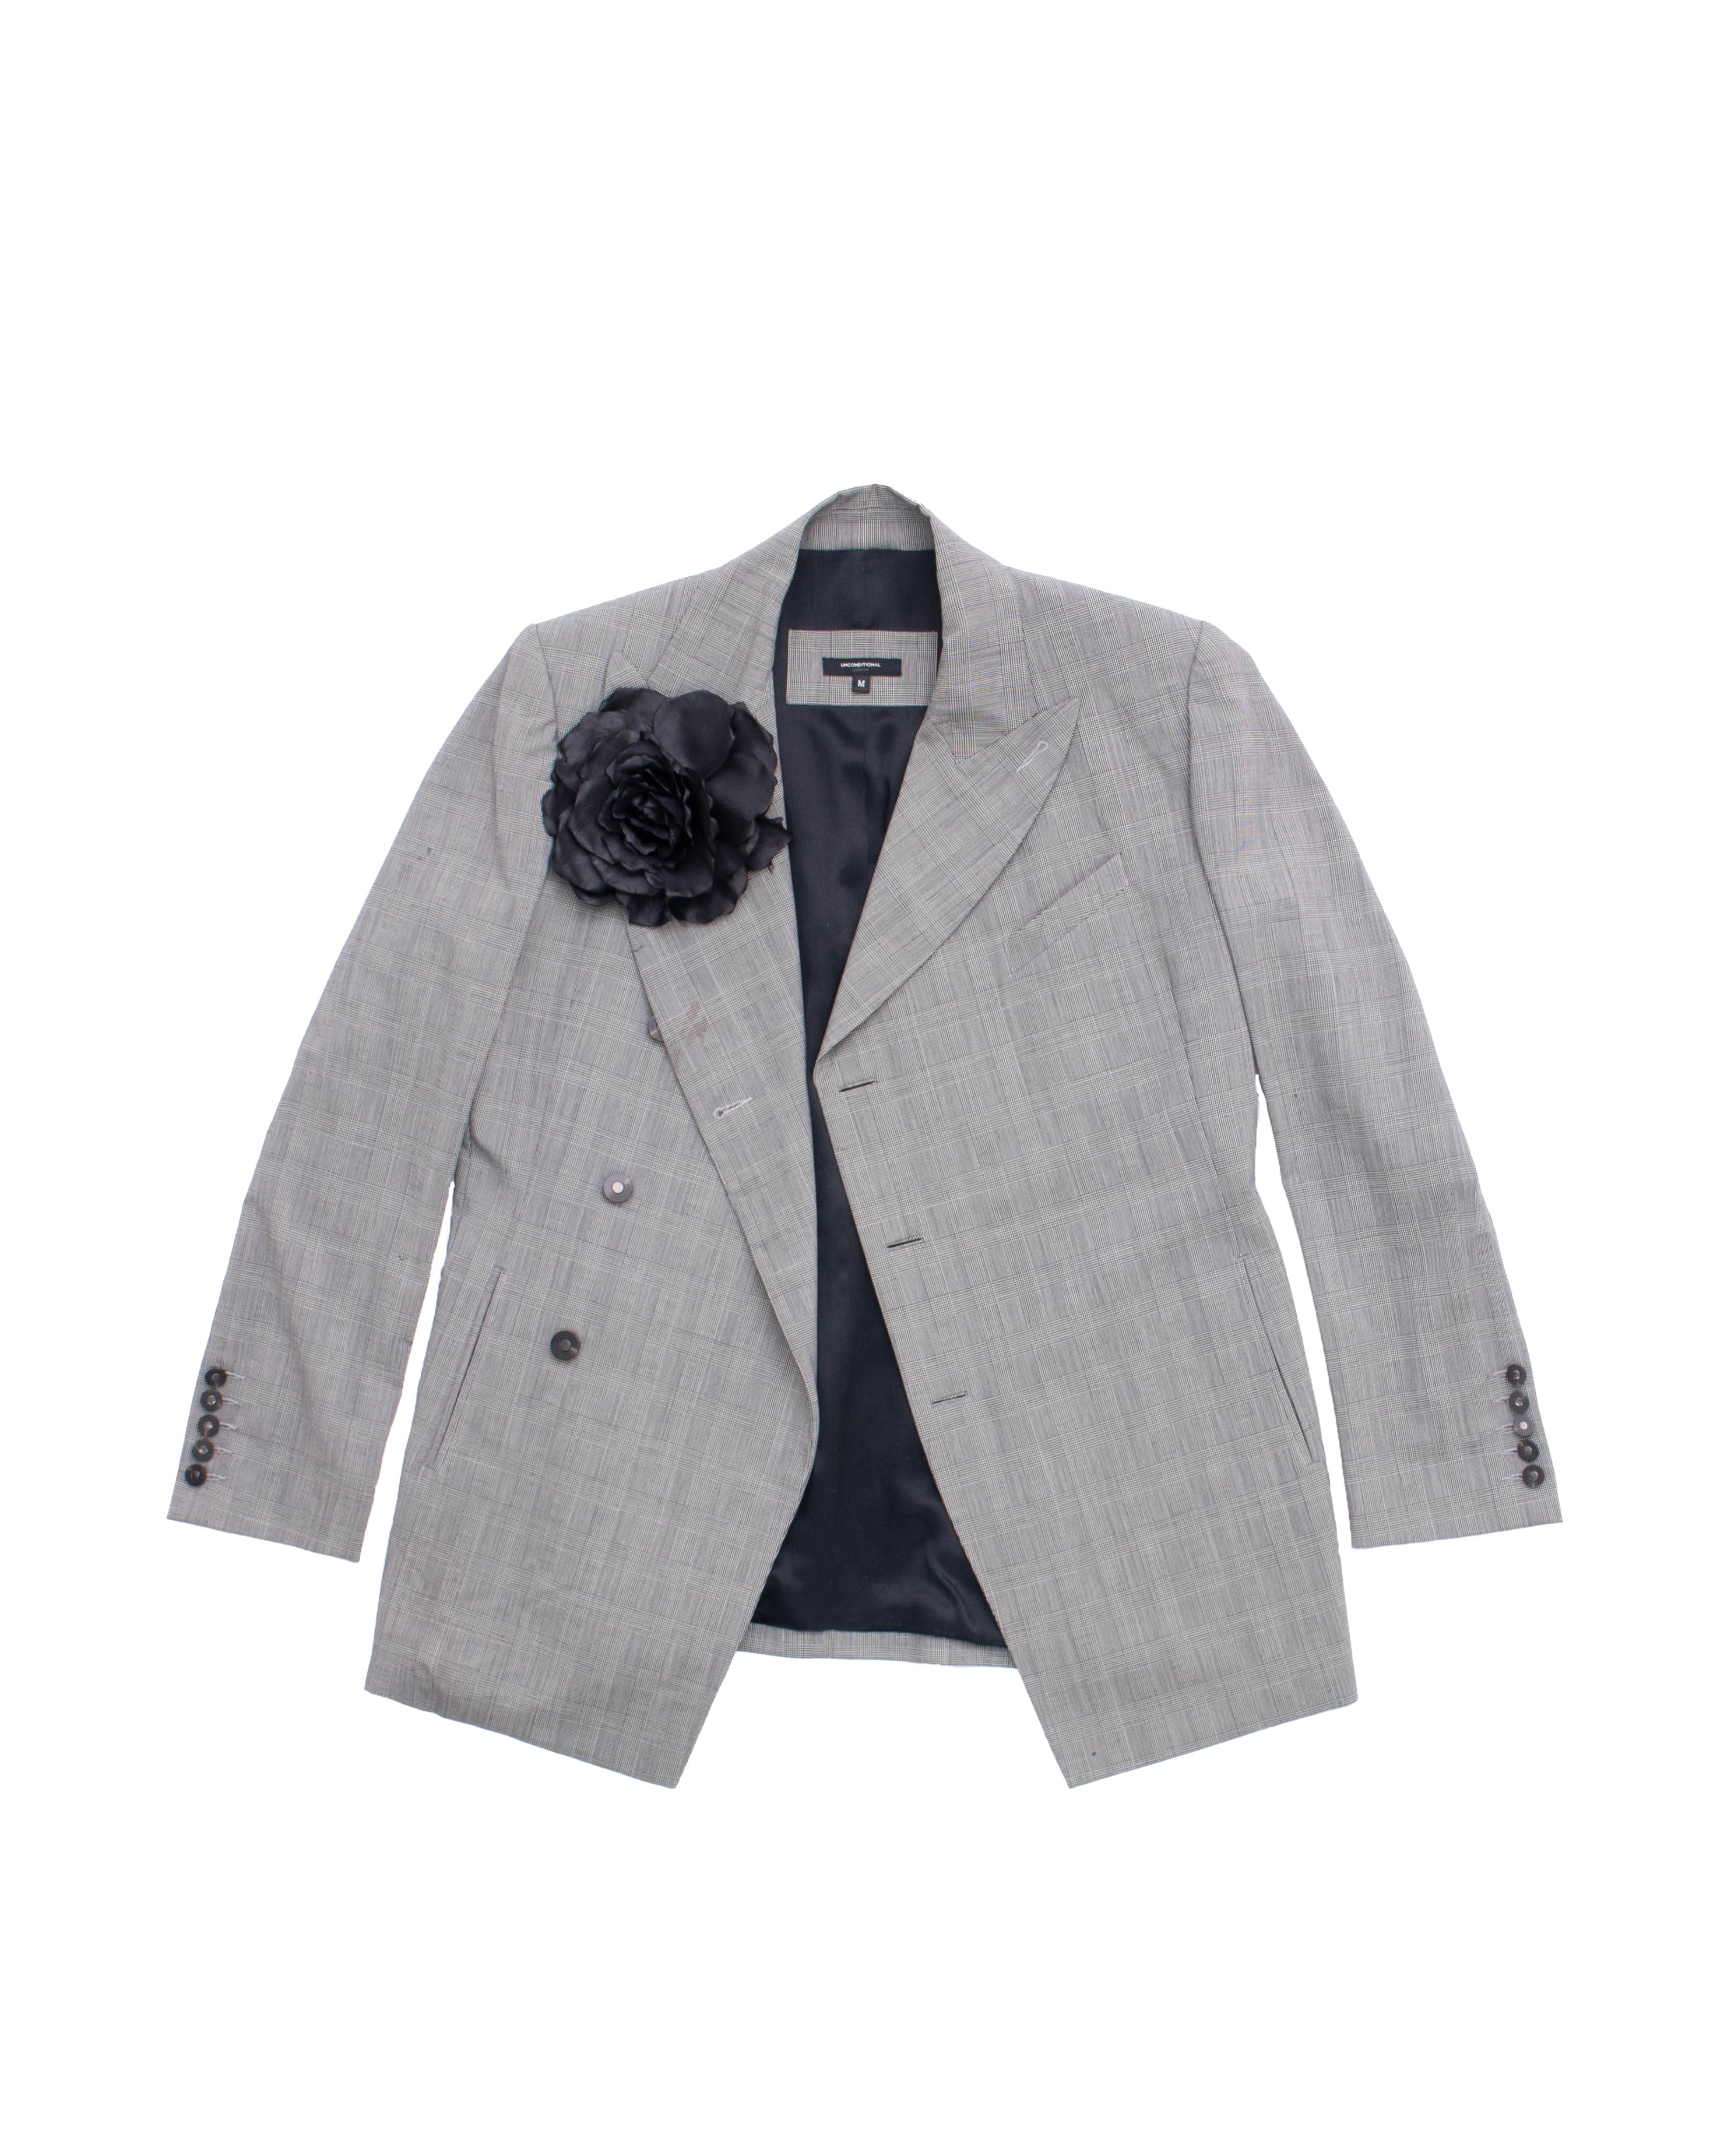 Light Grey Suit Jacket With Black Flower Detail